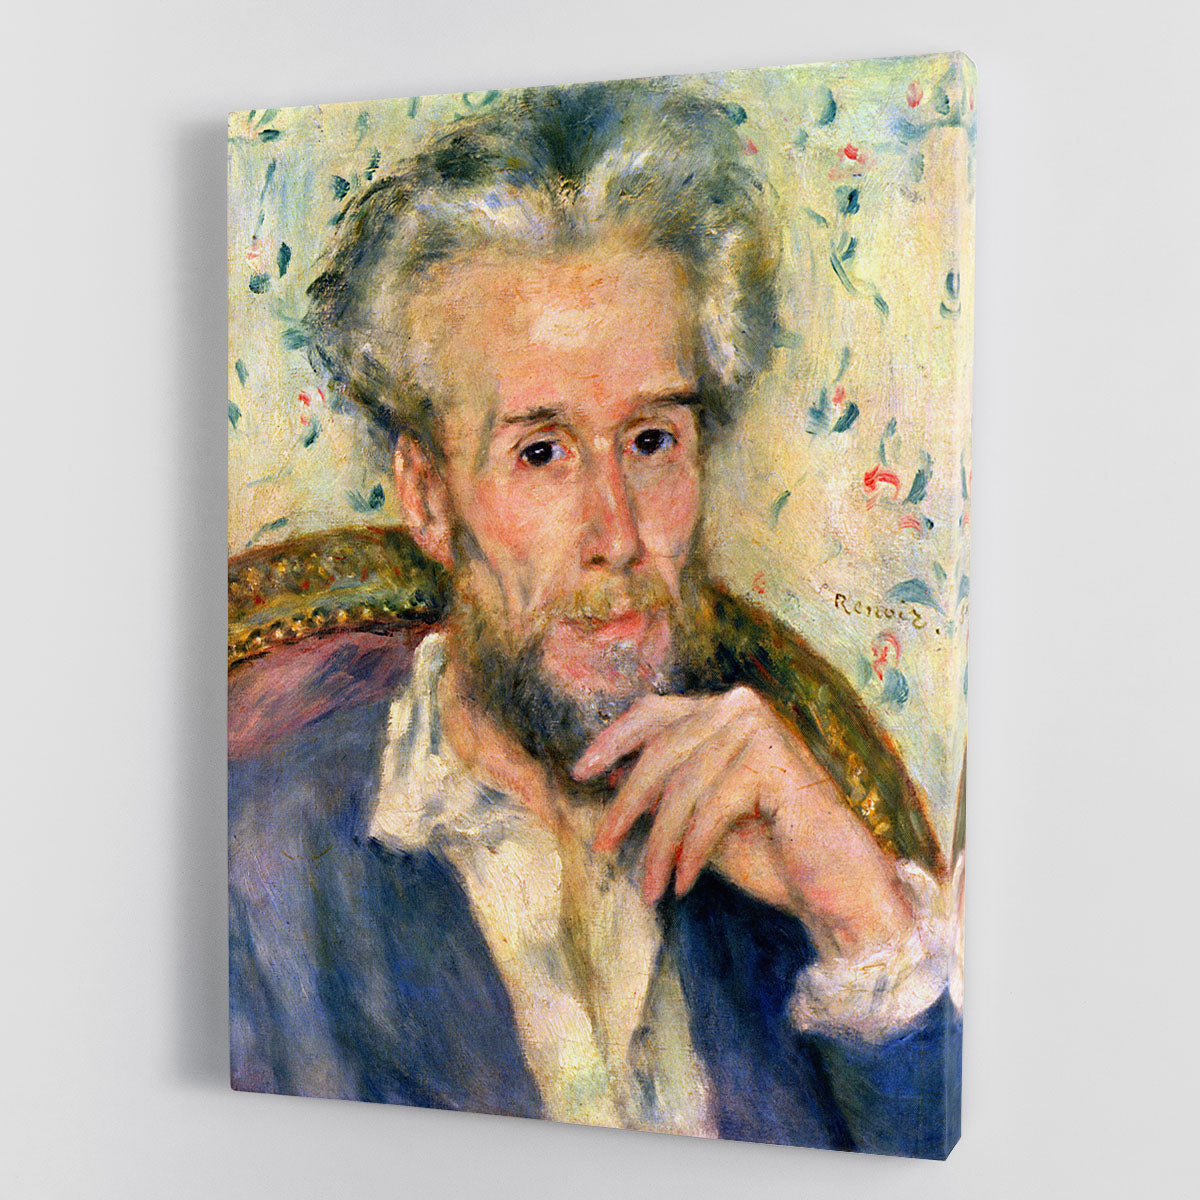 Portrait of a man by Renoir Canvas Print or Poster - Canvas Art Rocks - 1